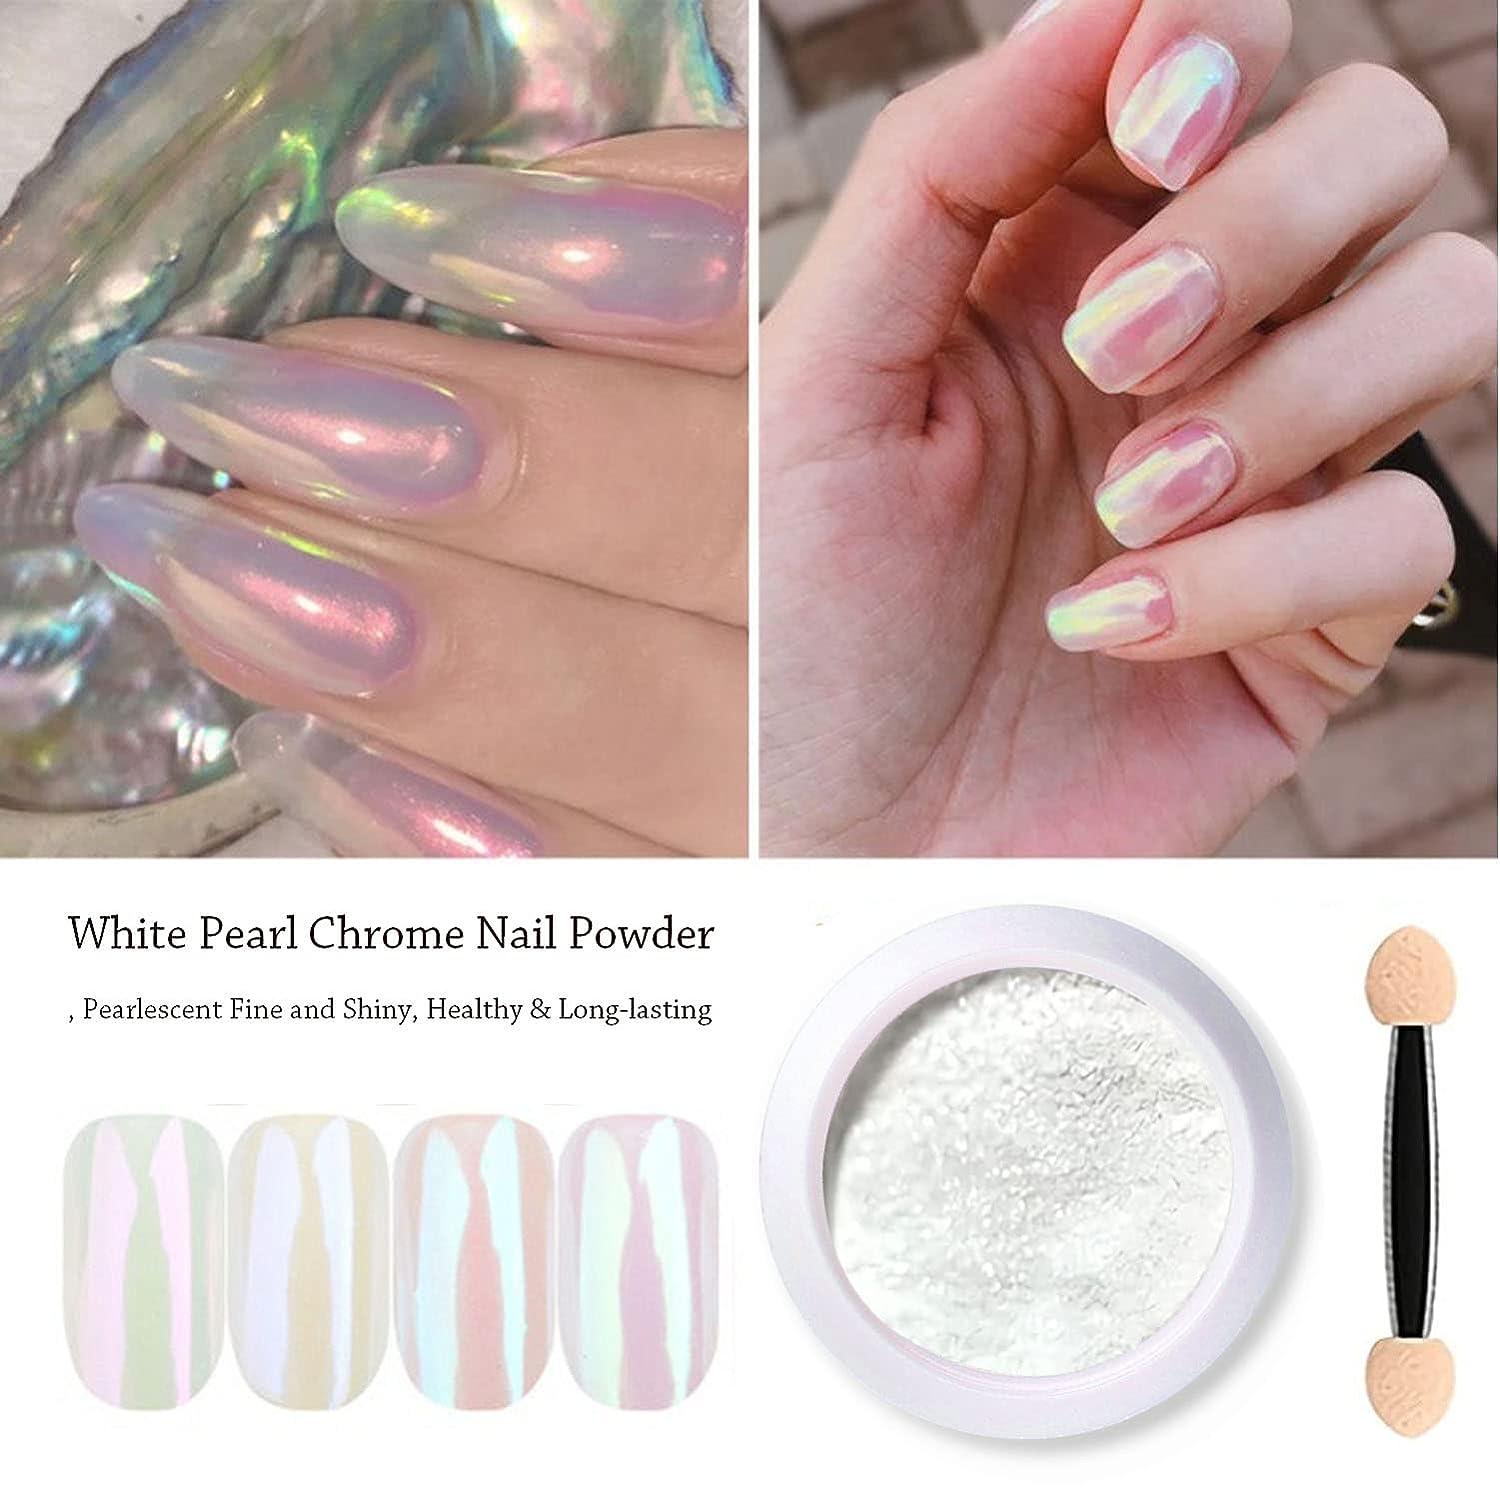 White Pearl Chrome Nail Powder Iridescent Mirror Effect Chrome